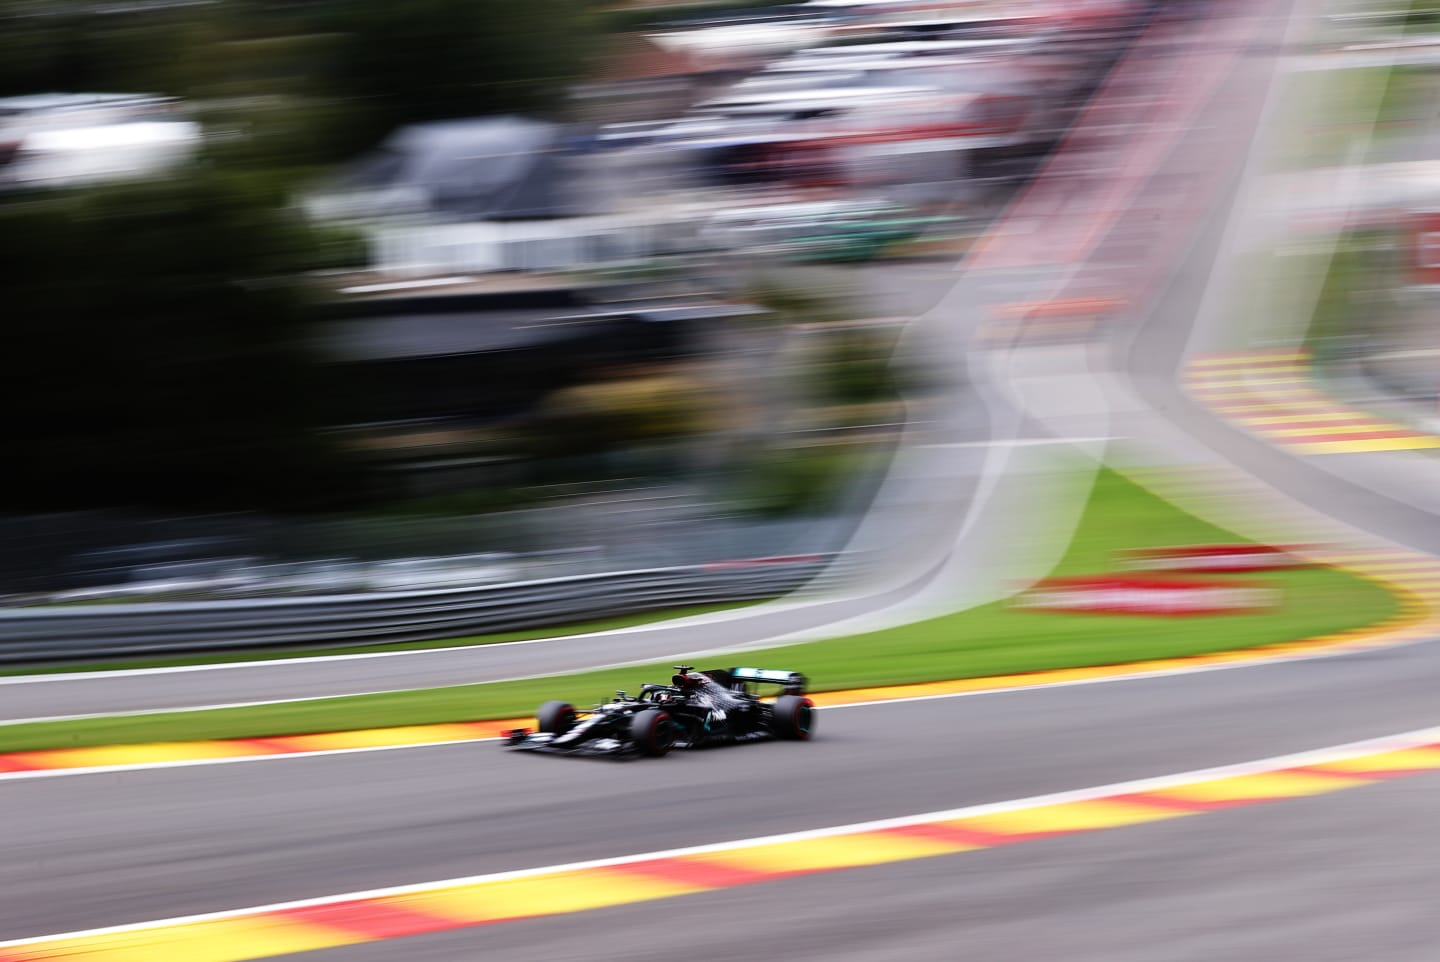 SPA, BELGIUM - AUGUST 29: Lewis Hamilton of Great Britain driving the (44) Mercedes AMG Petronas F1